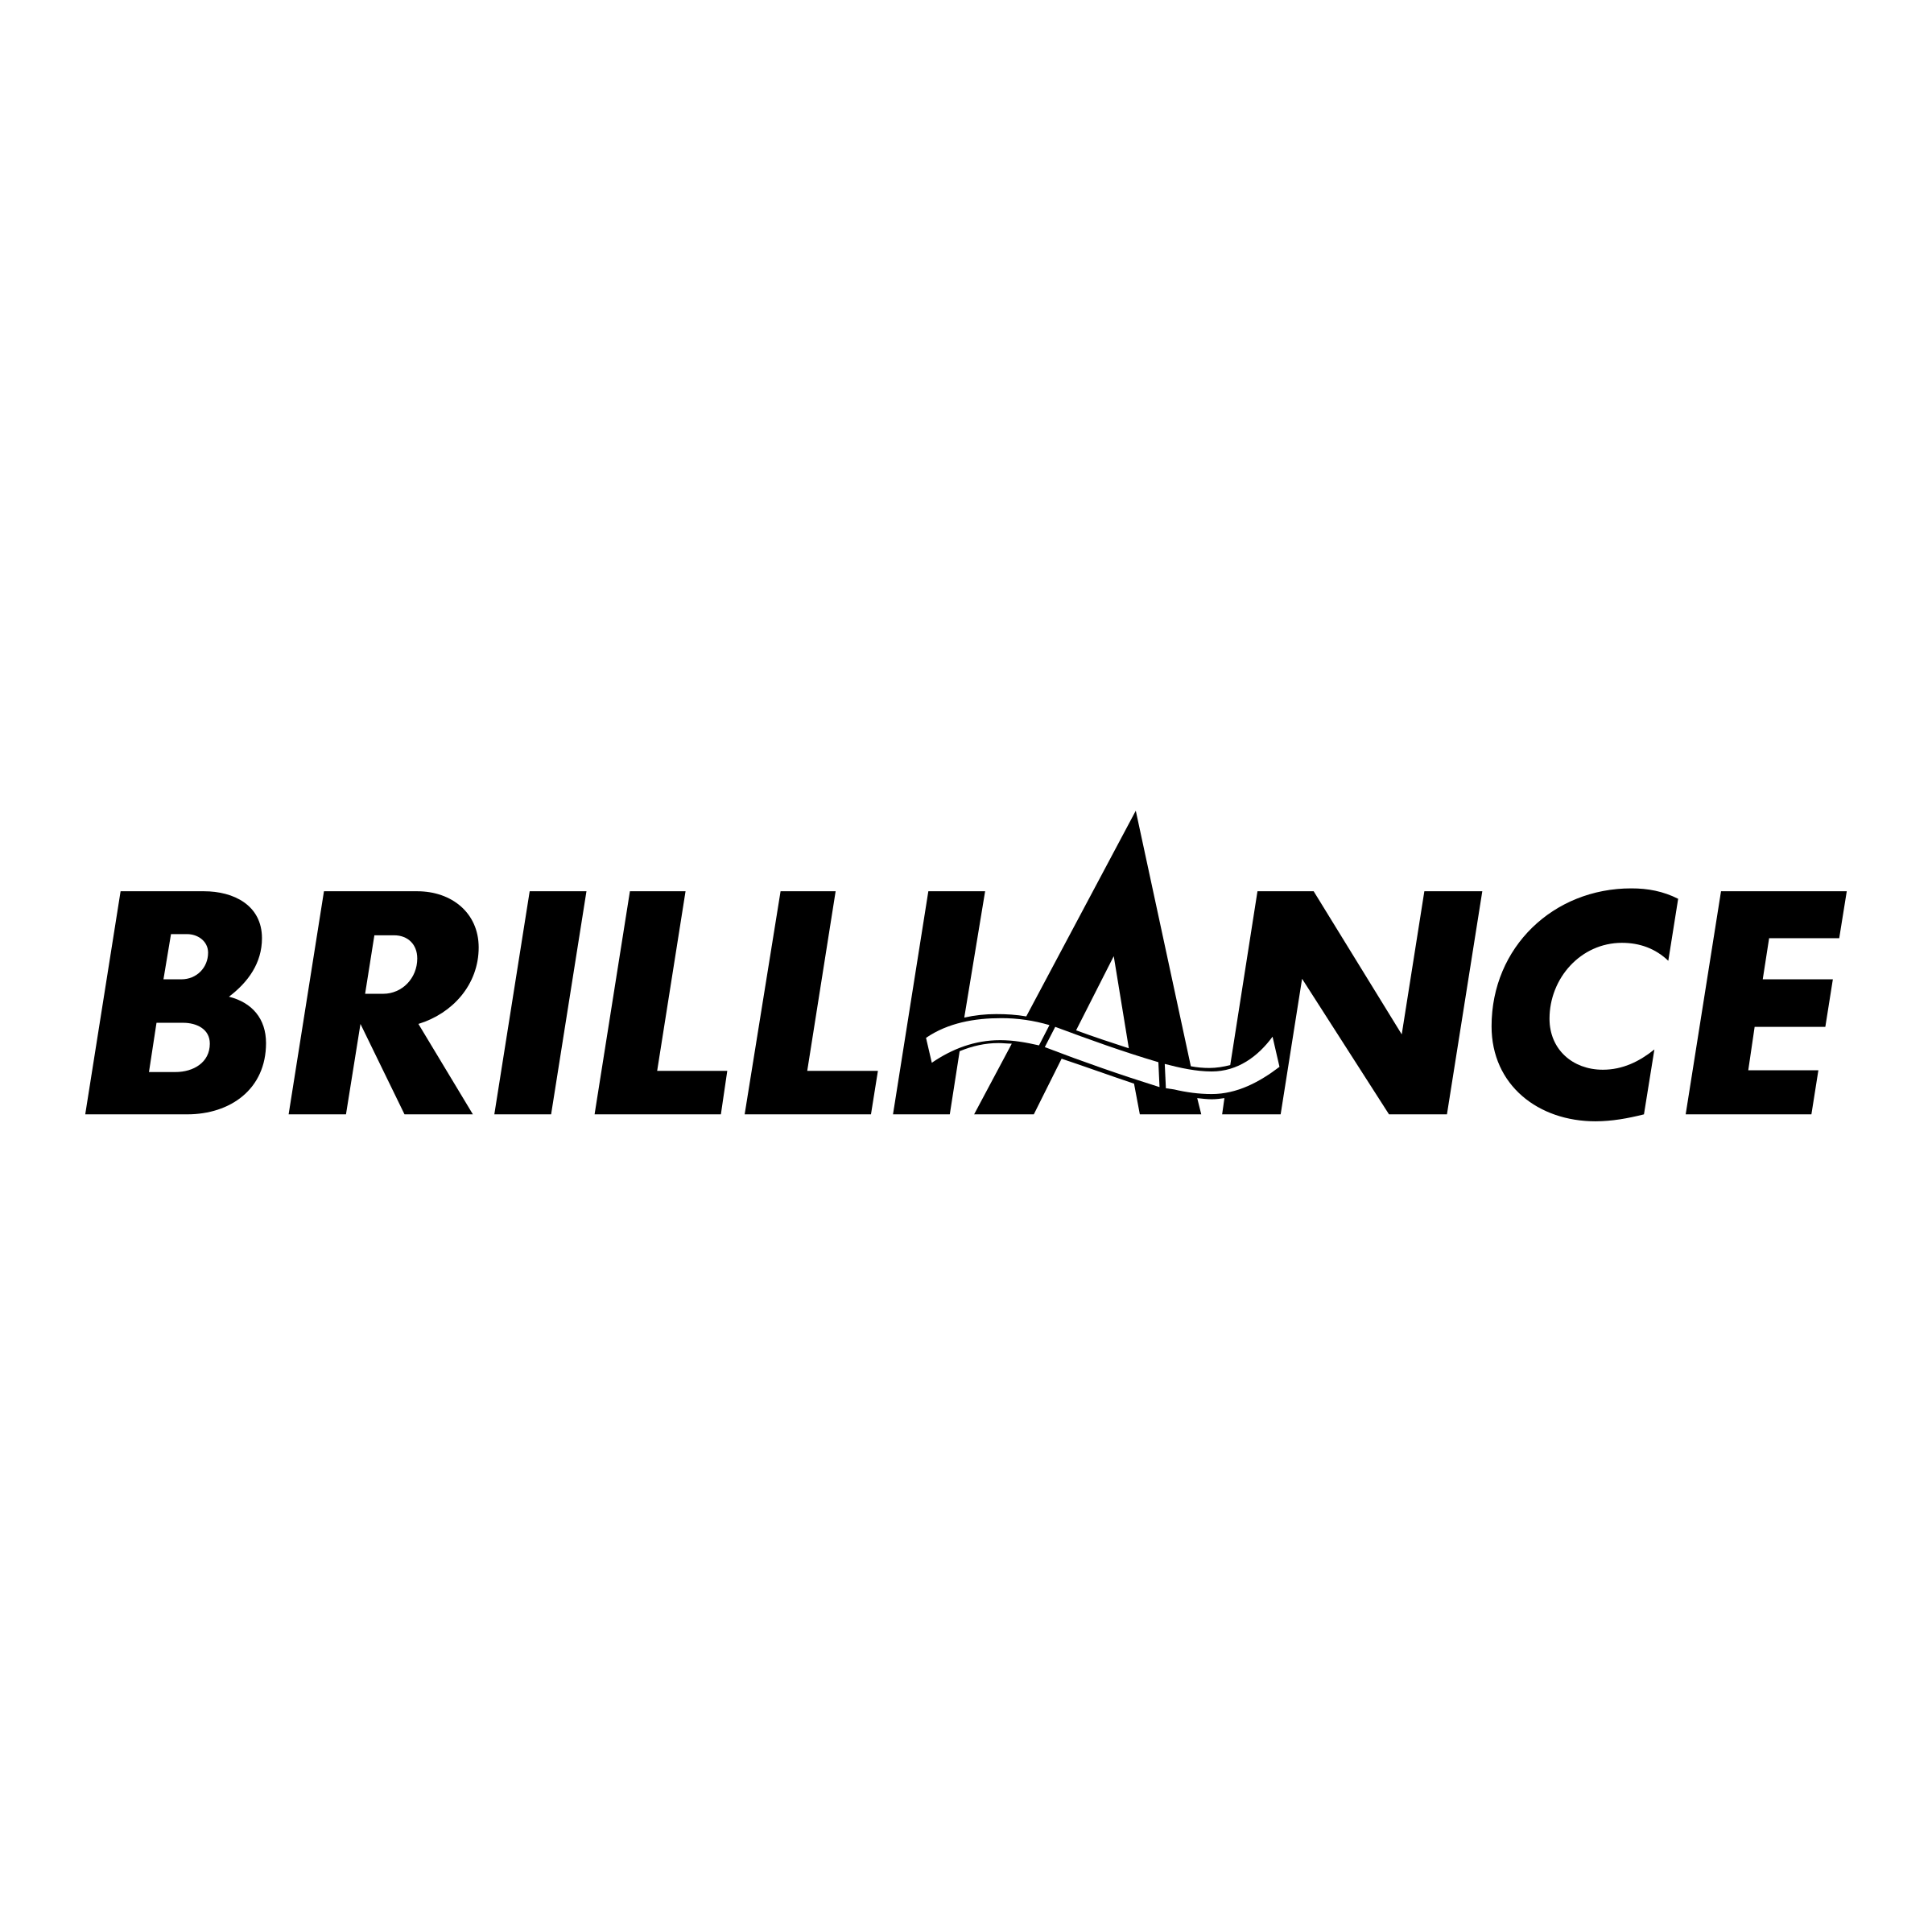 Brilliance Logo - Brilliance Logo PNG Transparent & SVG Vector - Freebie Supply